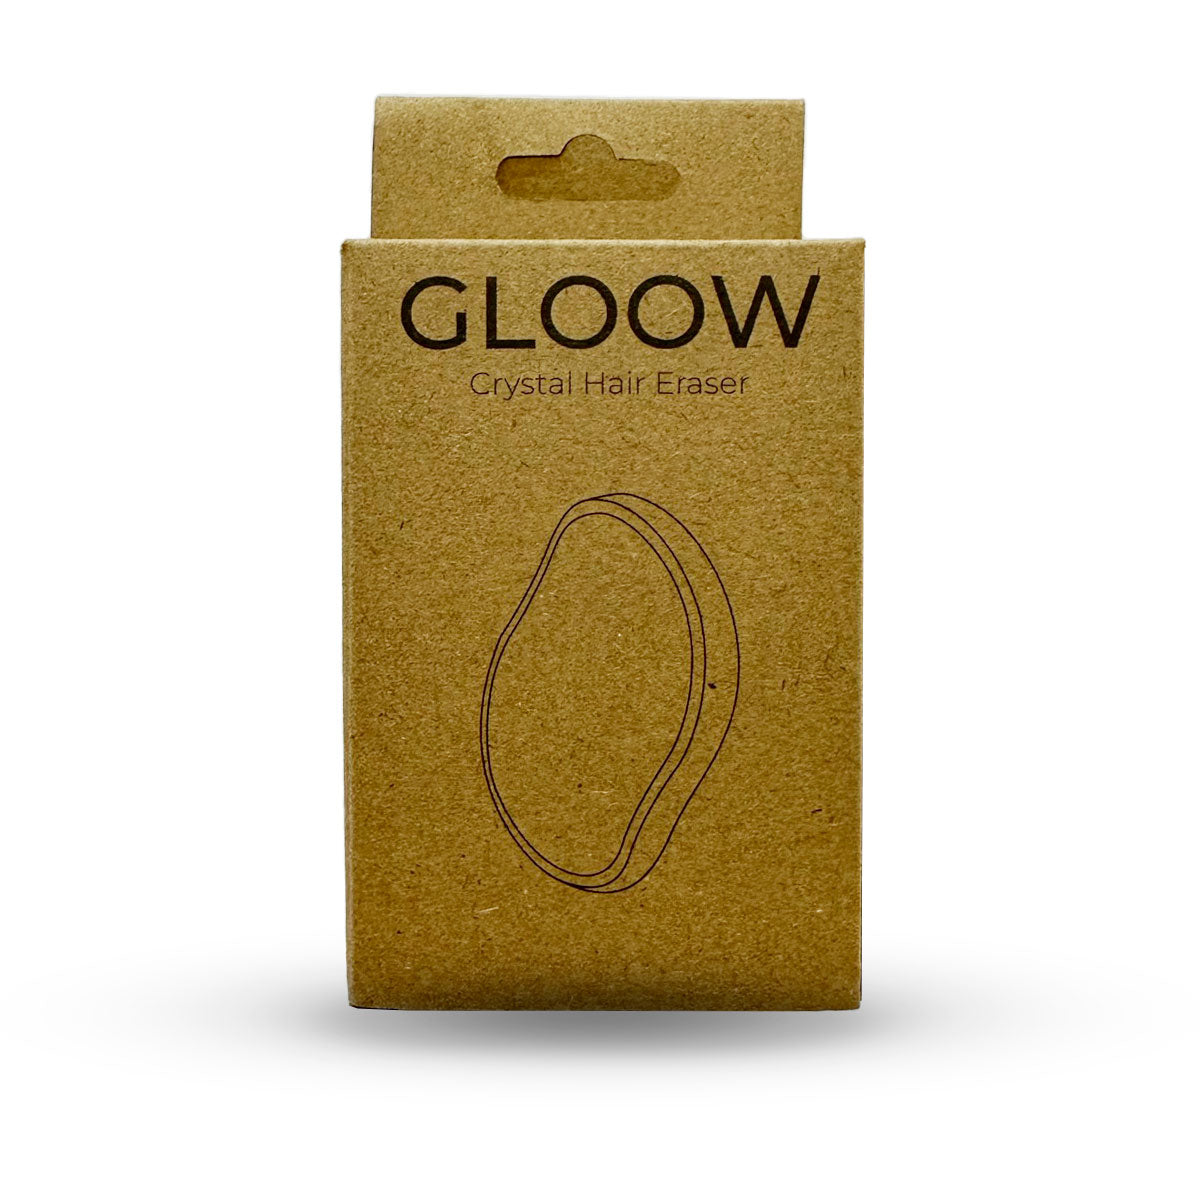 Gloow Crystal Hair Eraser - Hårborttagare